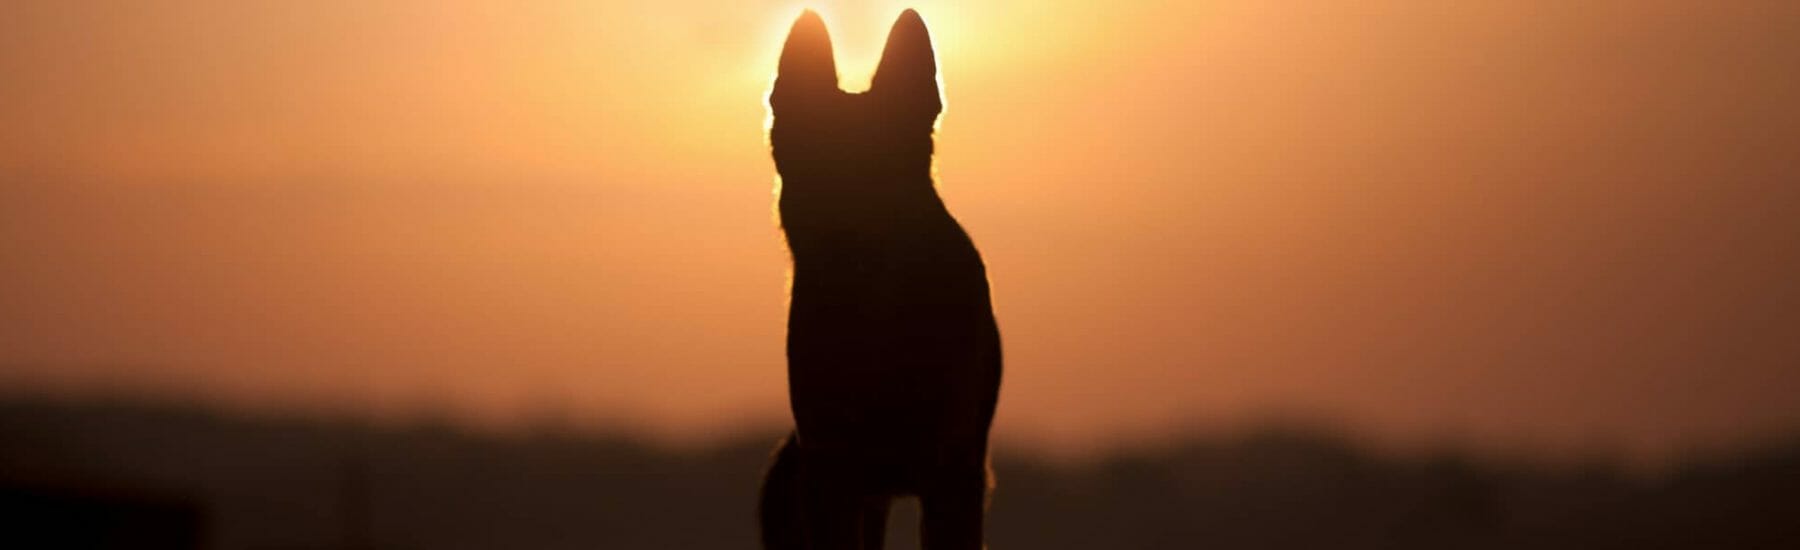 Dog at Sunset